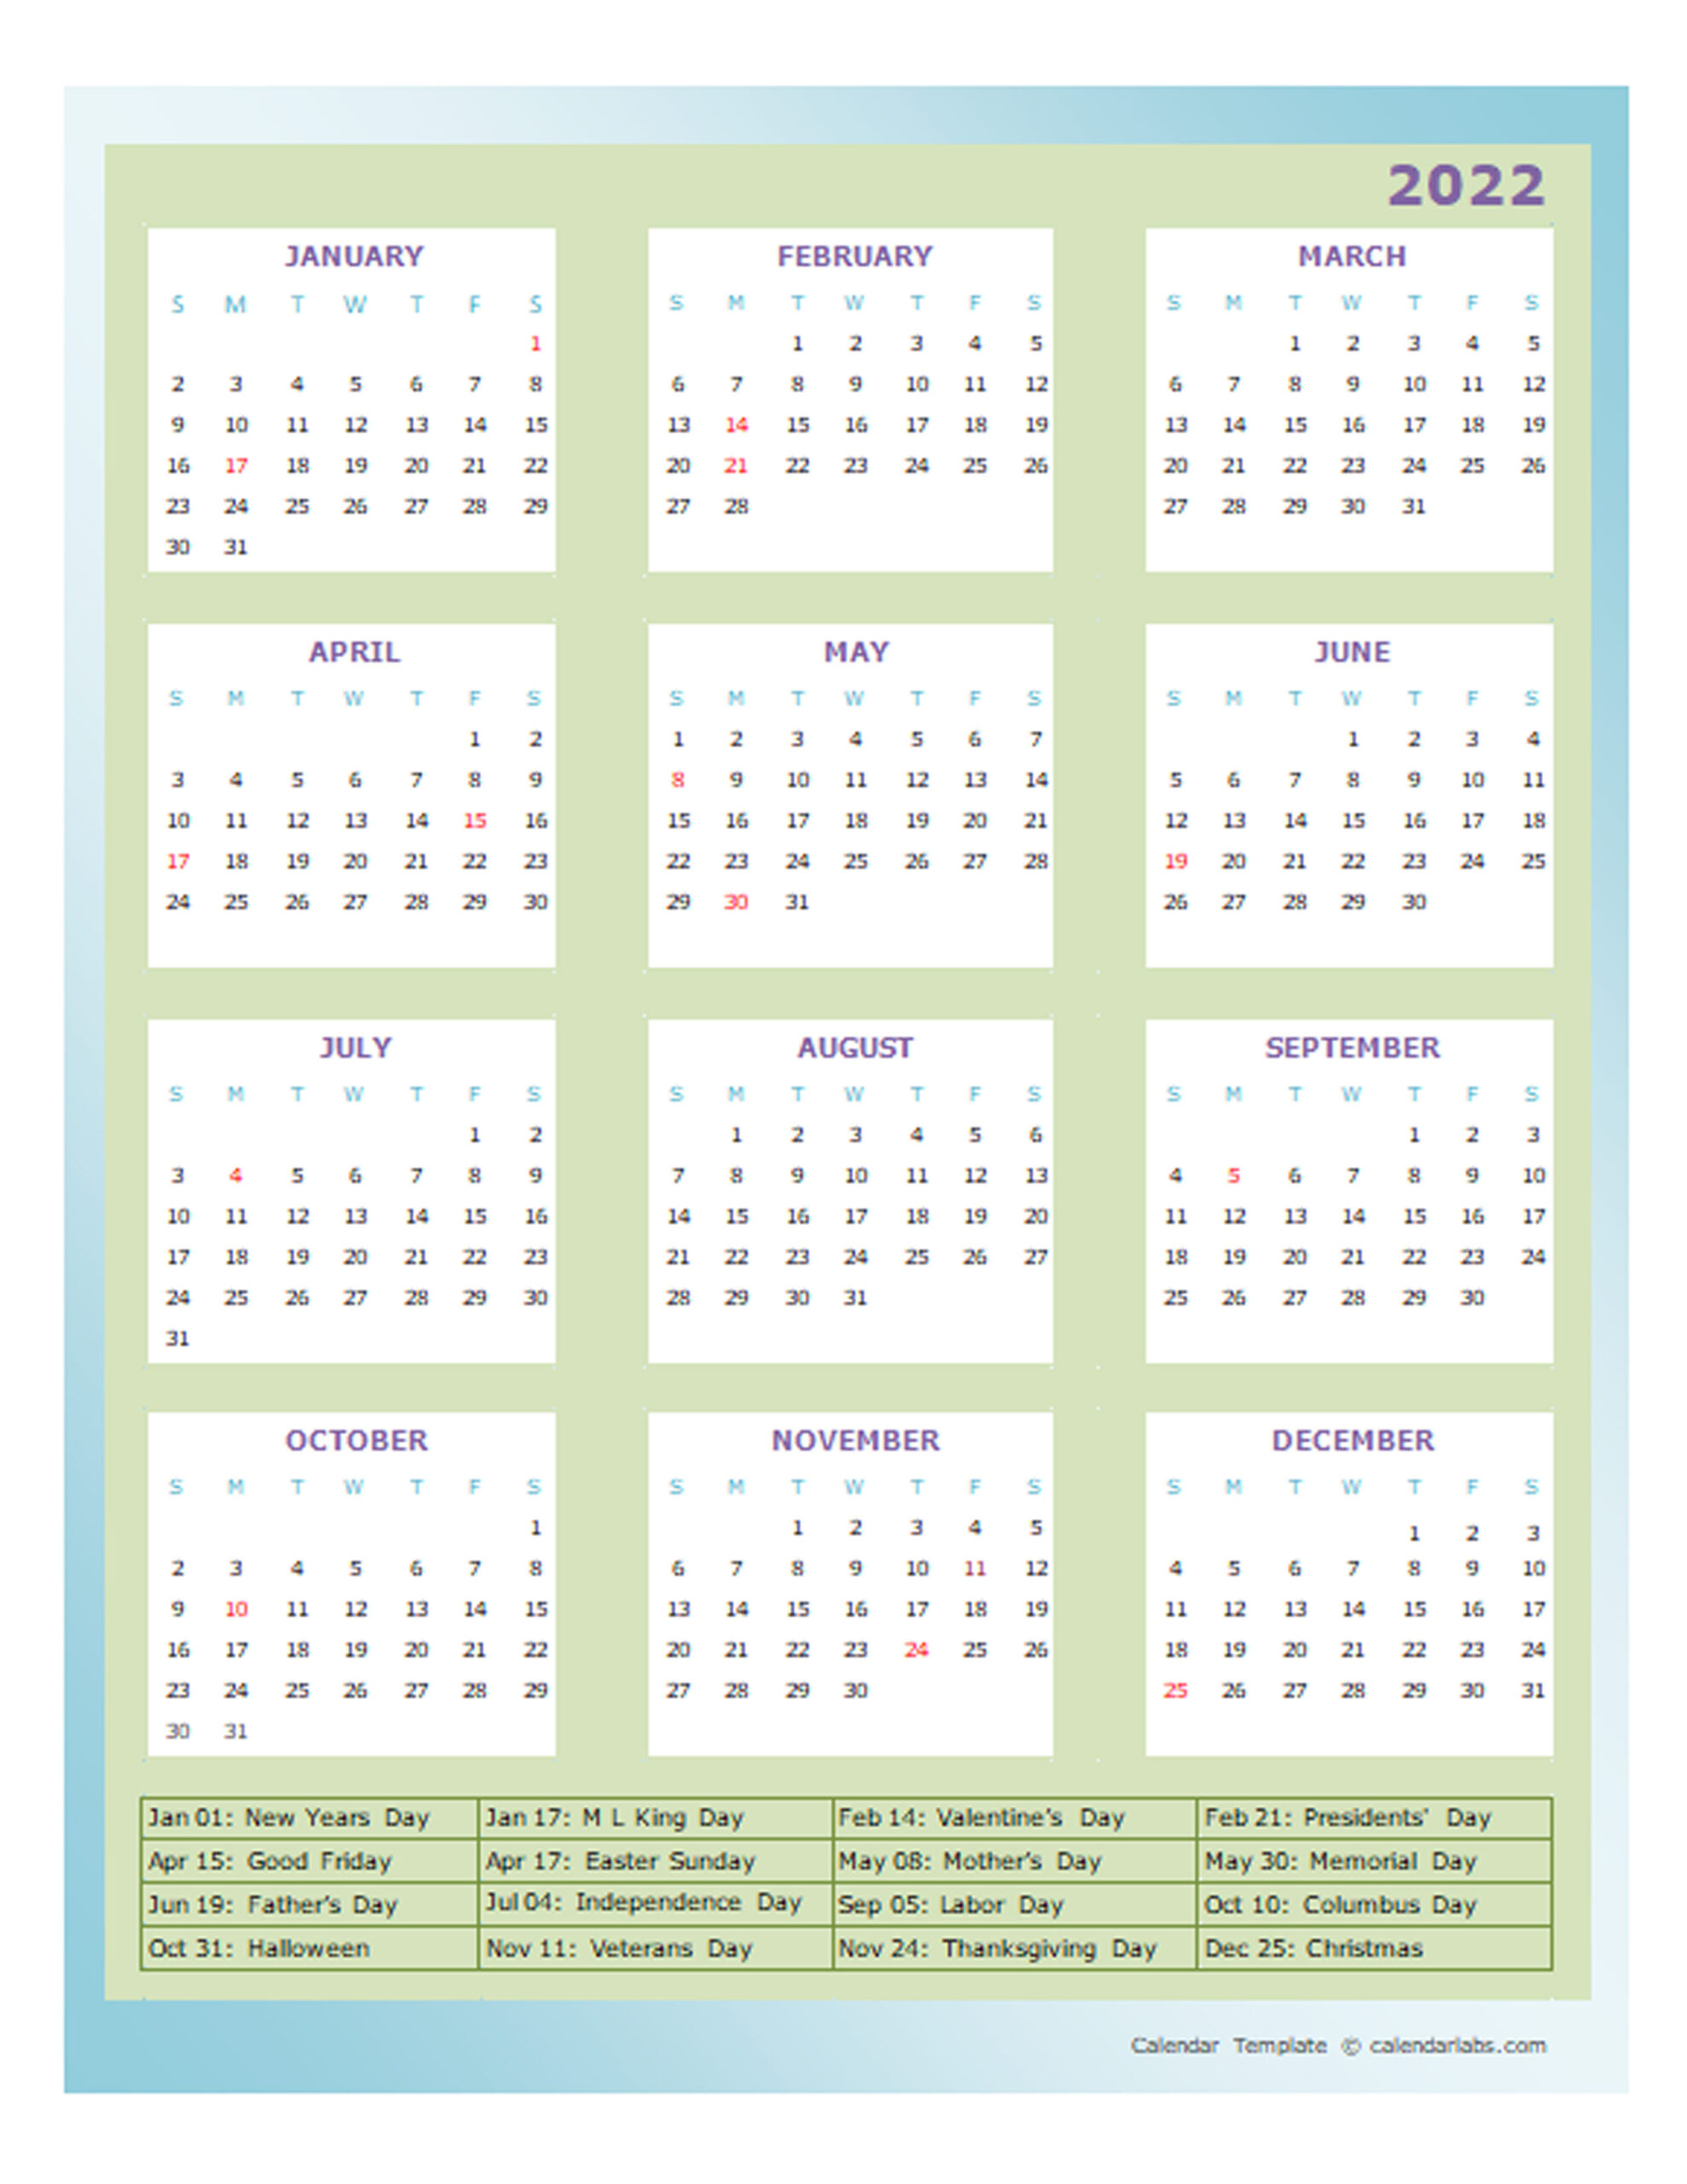 2022 Annual Calendar Design Template - Free Printable Templates-Calendar 2022 Malaysia School Holiday